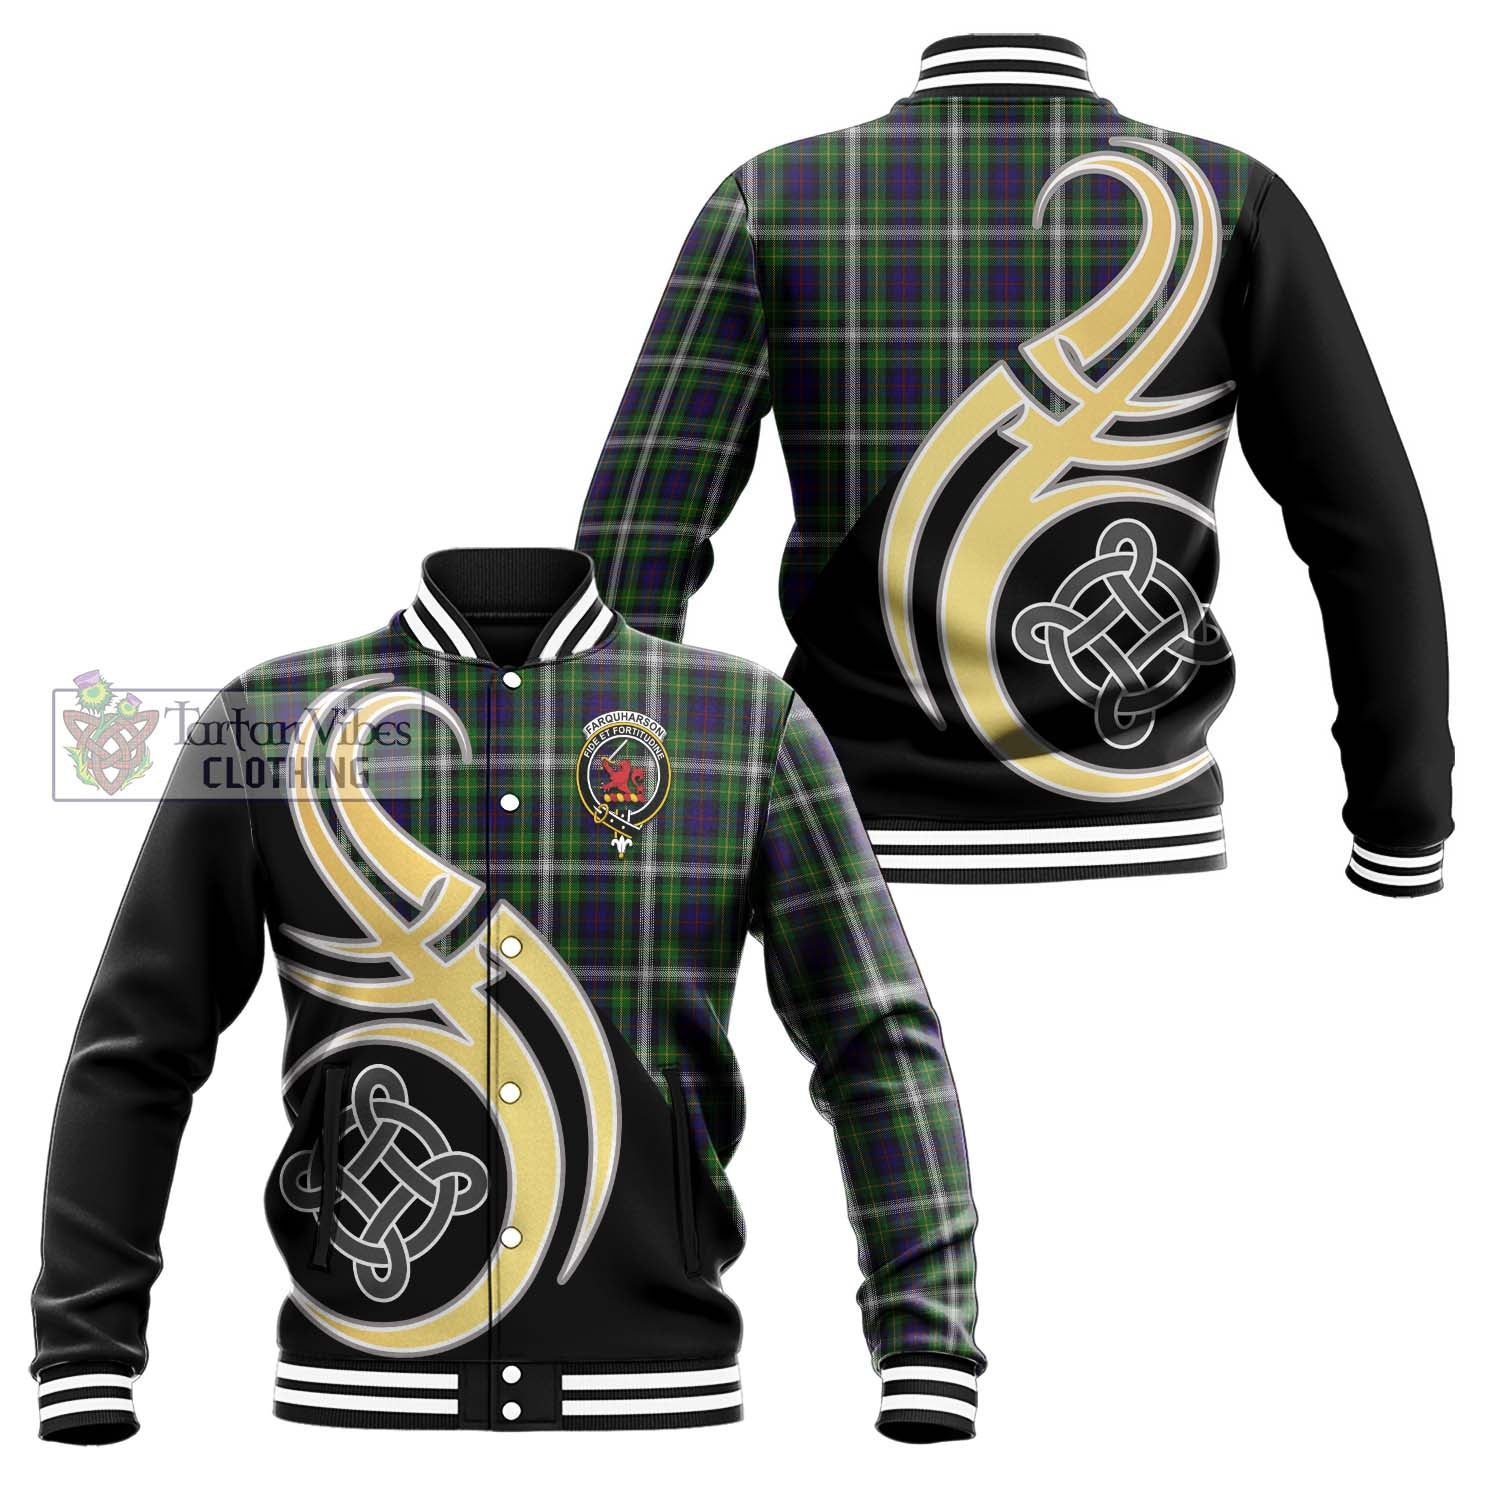 Tartan Vibes Clothing Farquharson Dress Tartan Baseball Jacket with Family Crest and Celtic Symbol Style